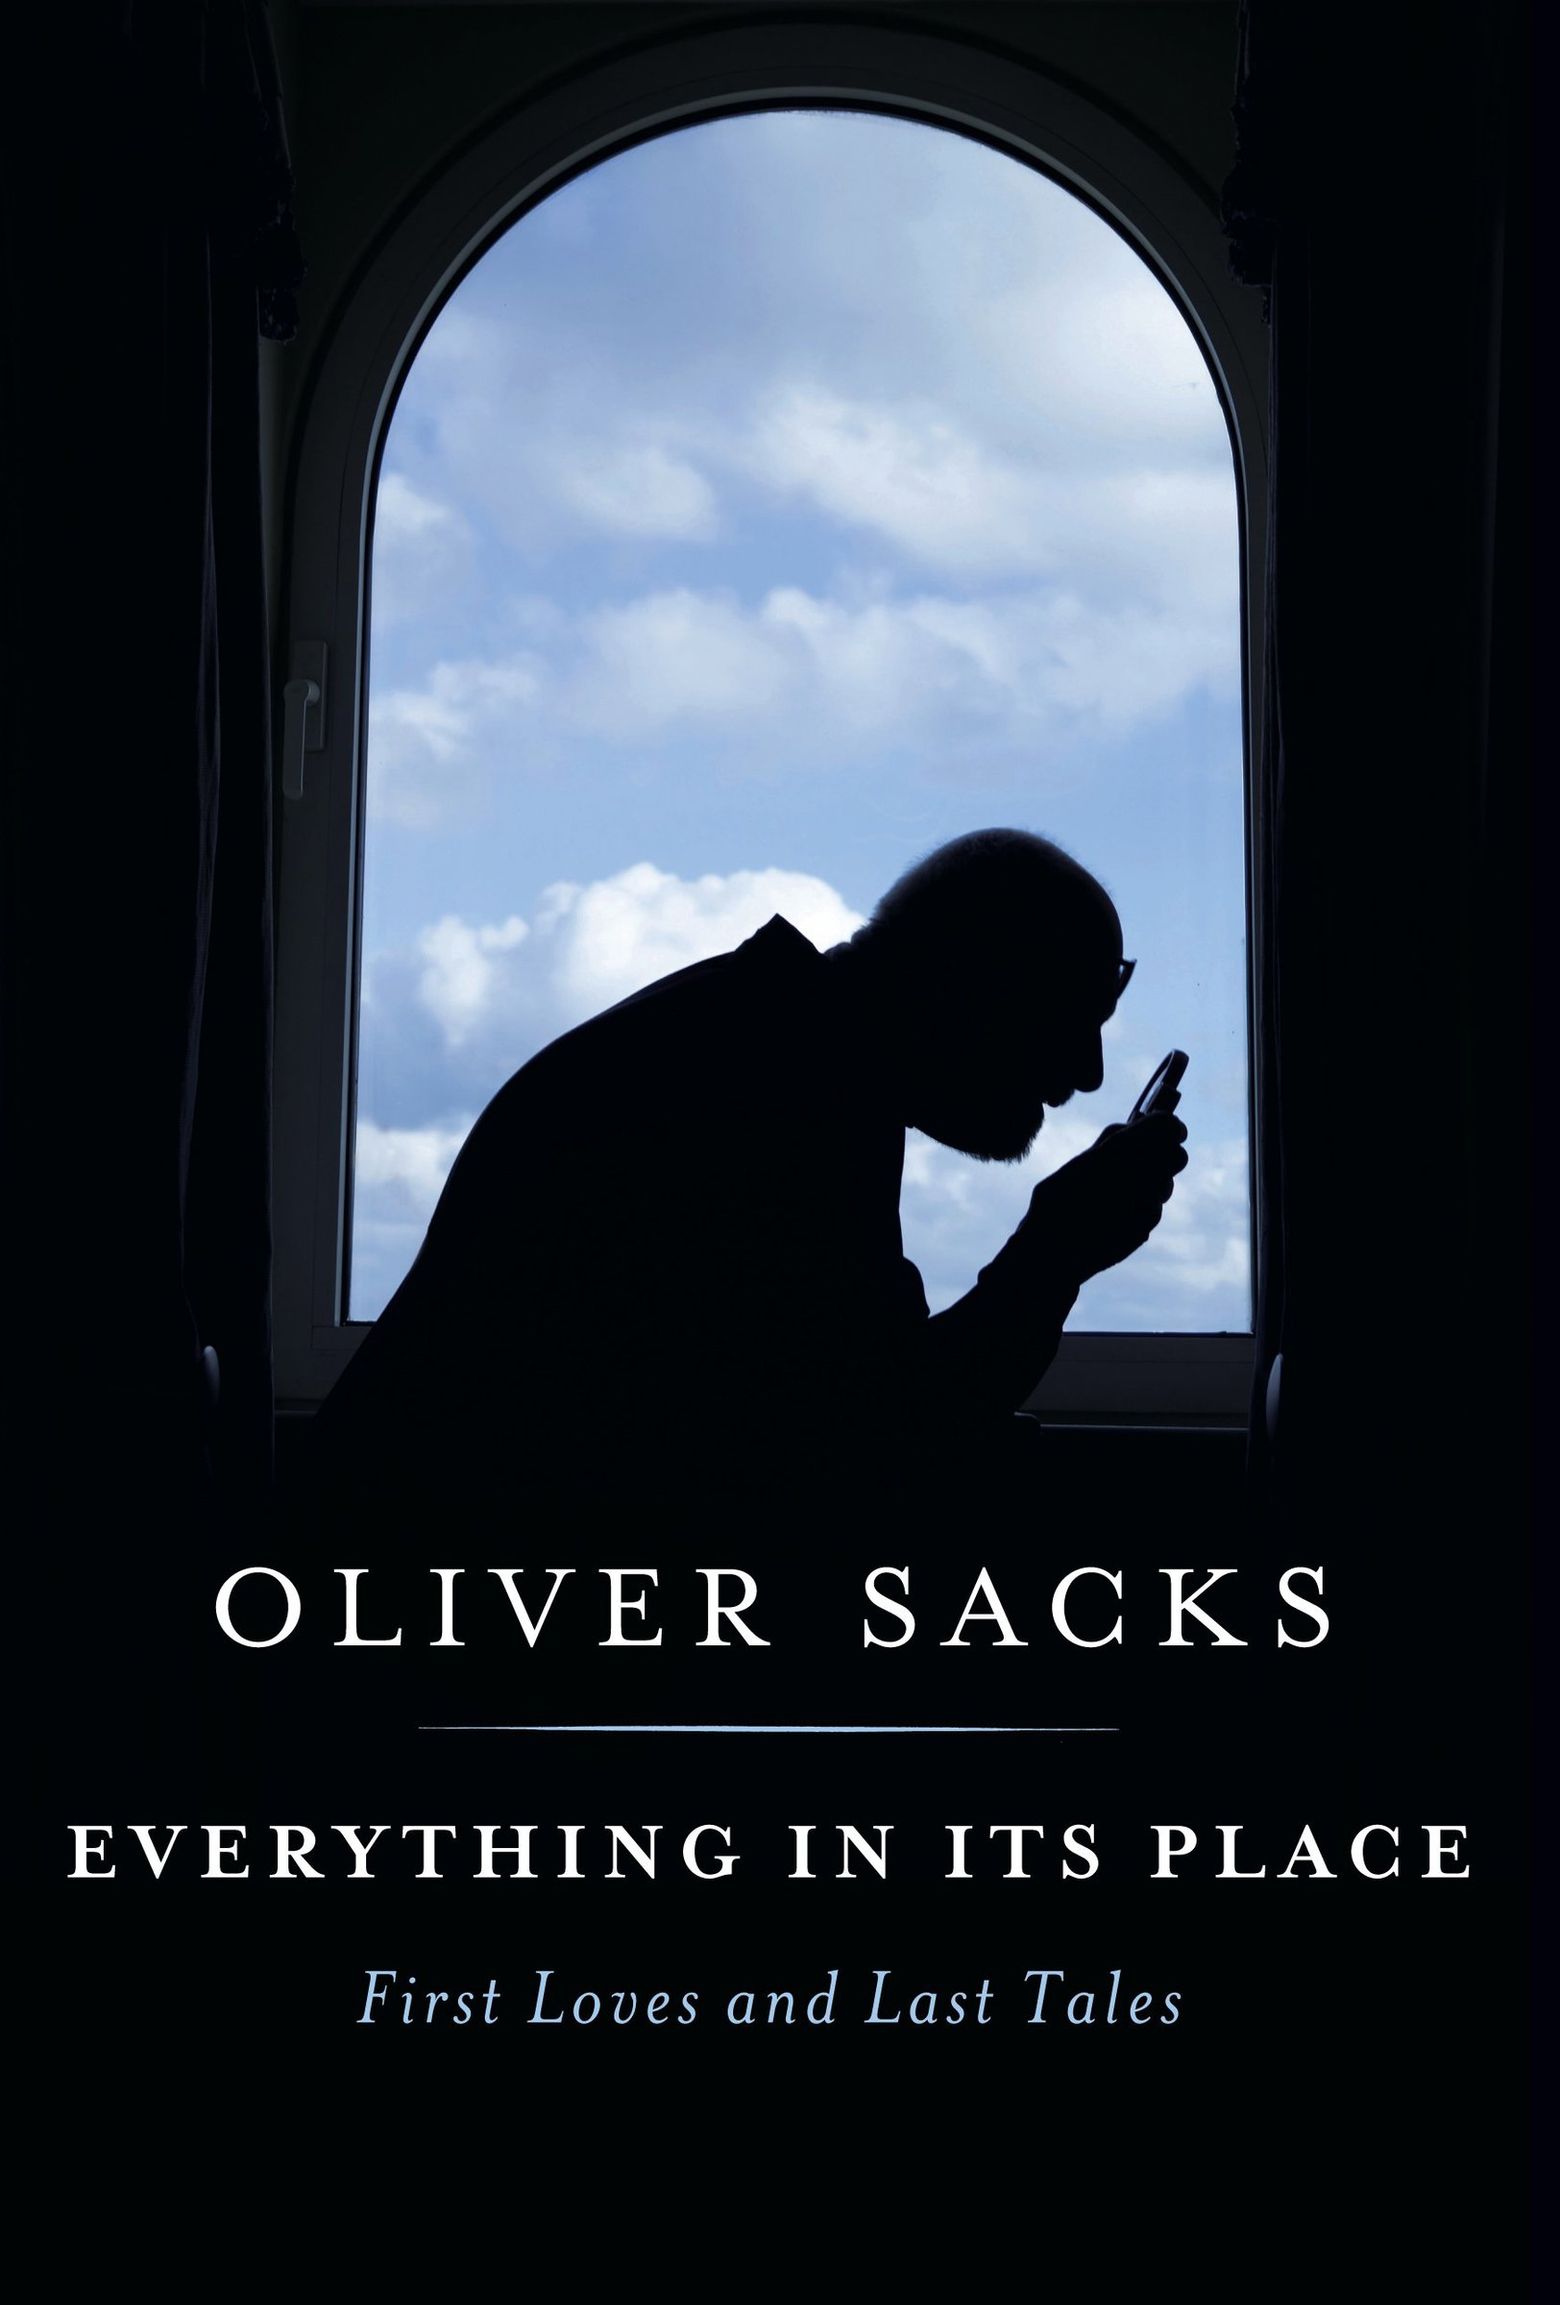 Oliver Sacks' Infinite Curiosity